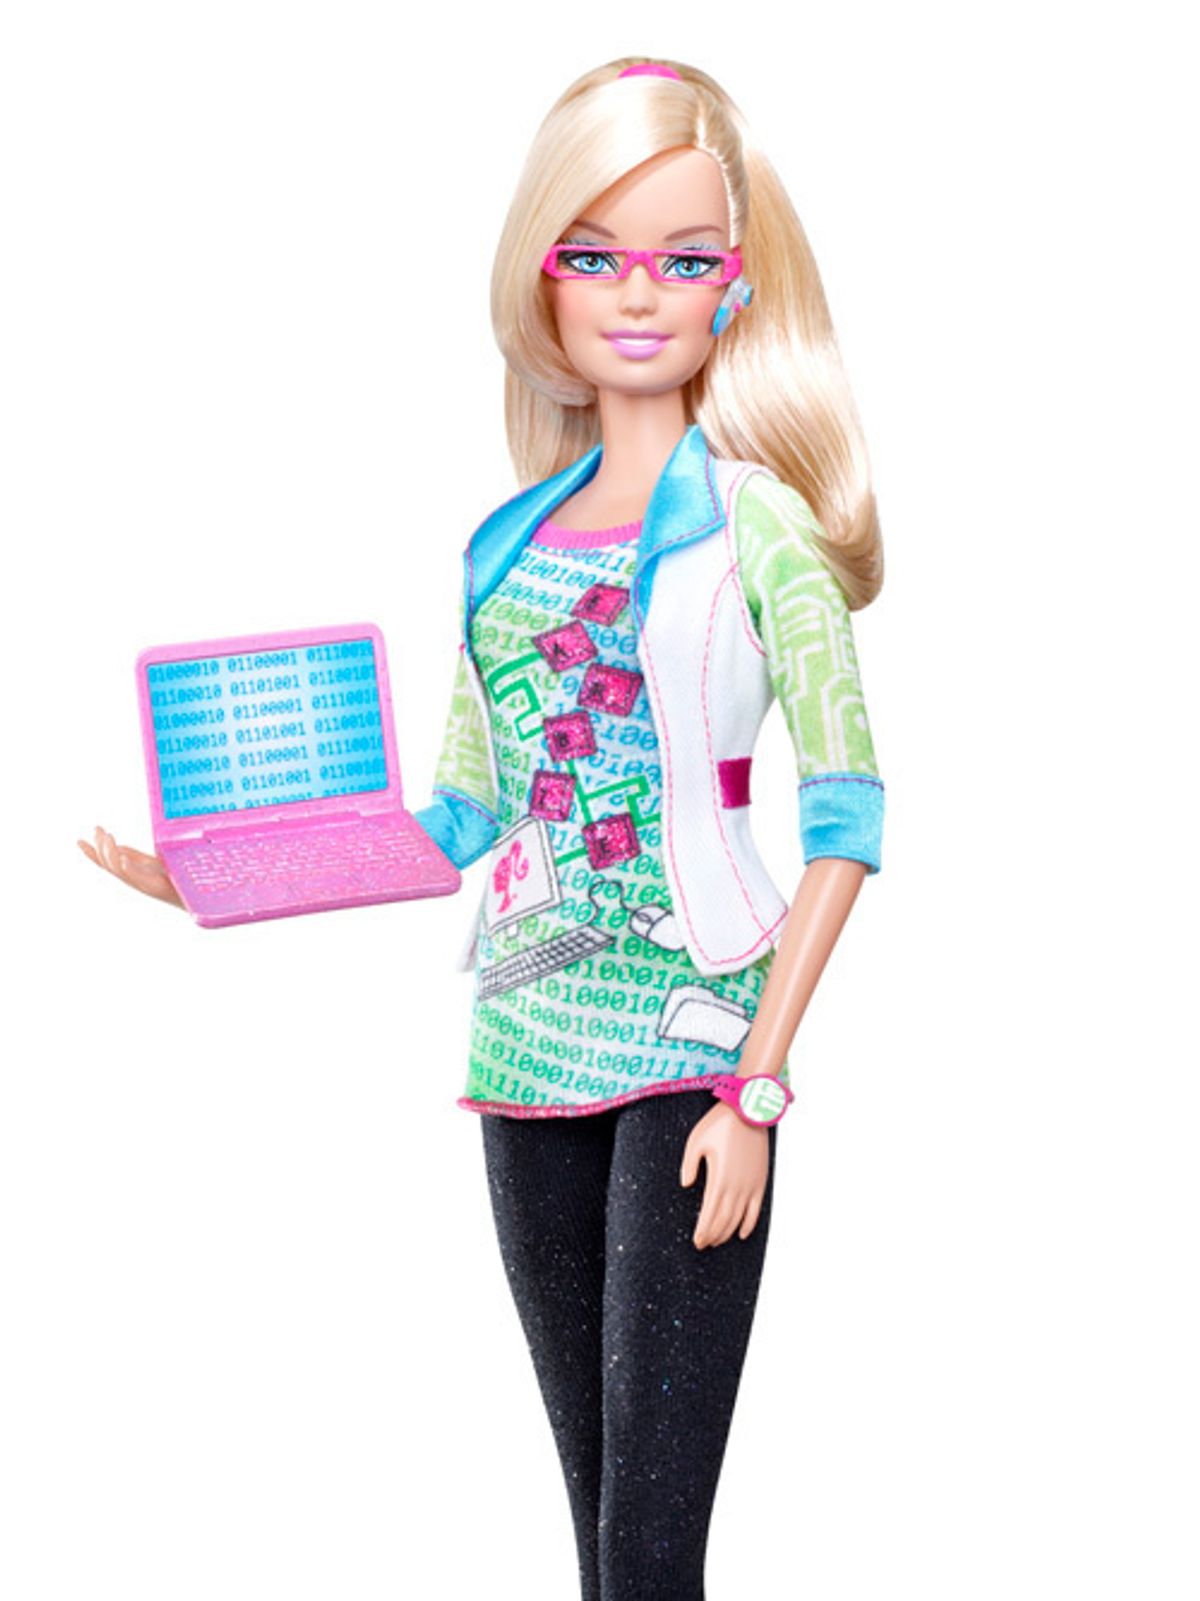 Math no longer tough for Barbie 